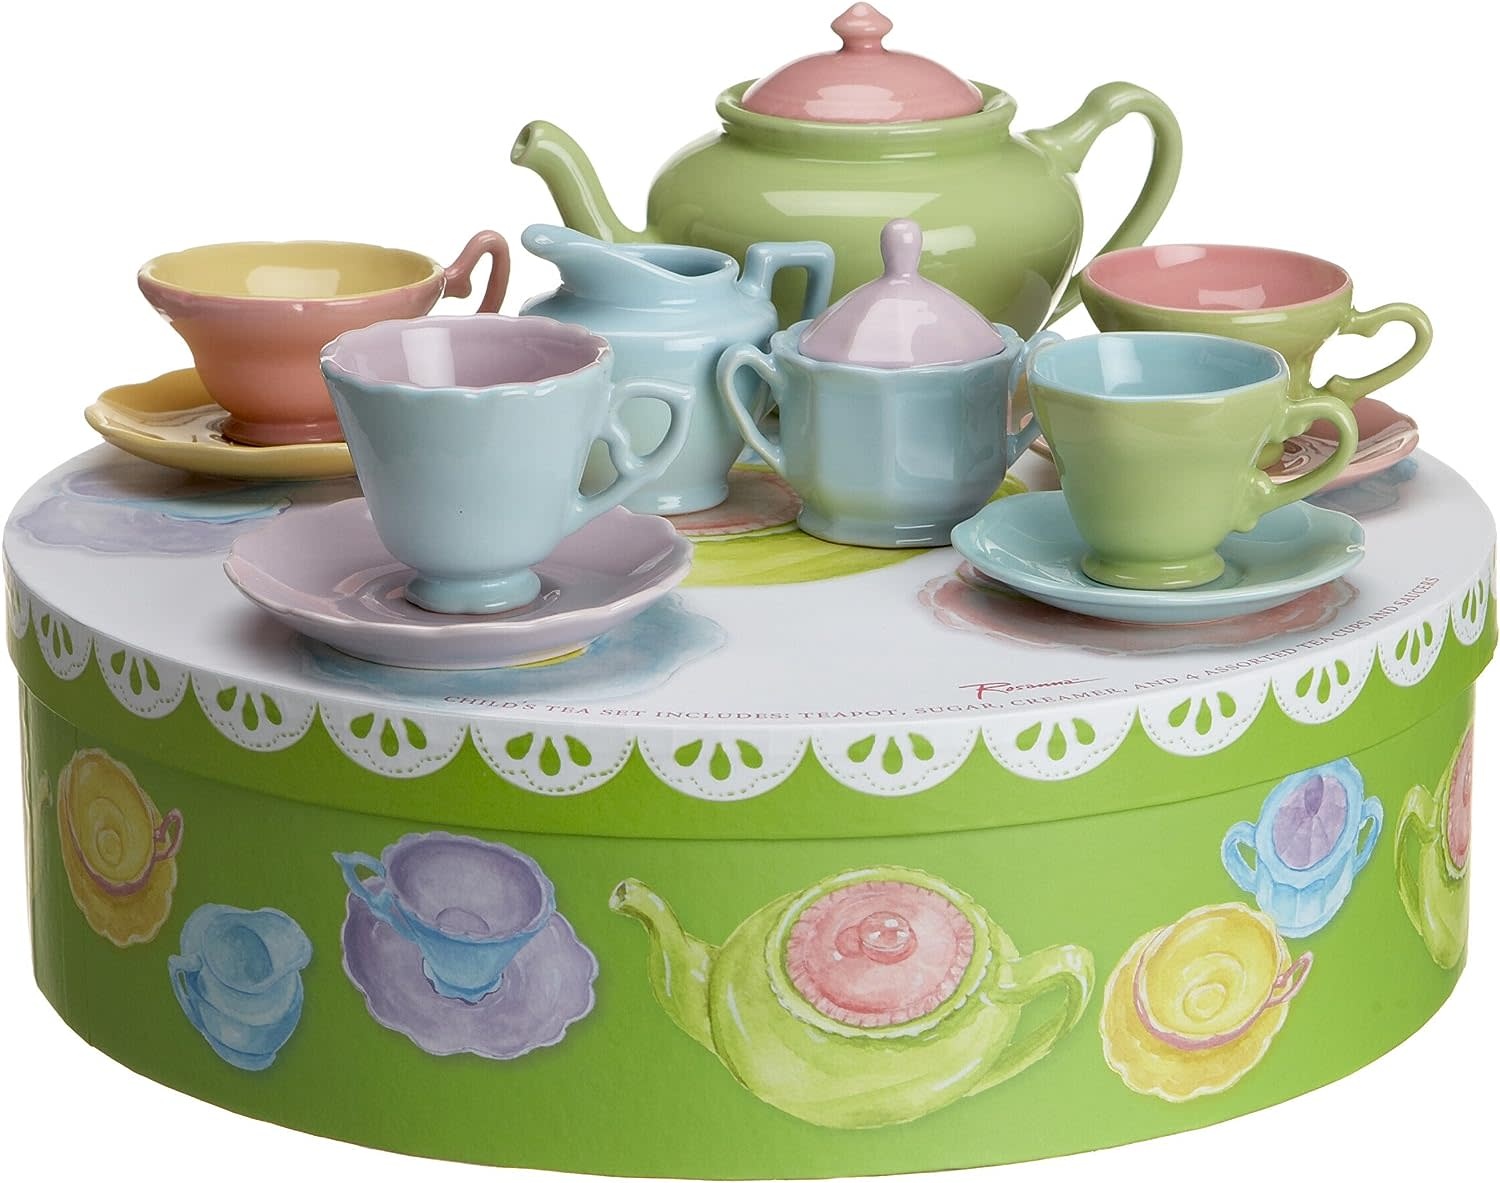 Rosa's pottery studio - My Alice in Wonderland tea set ❤️ I